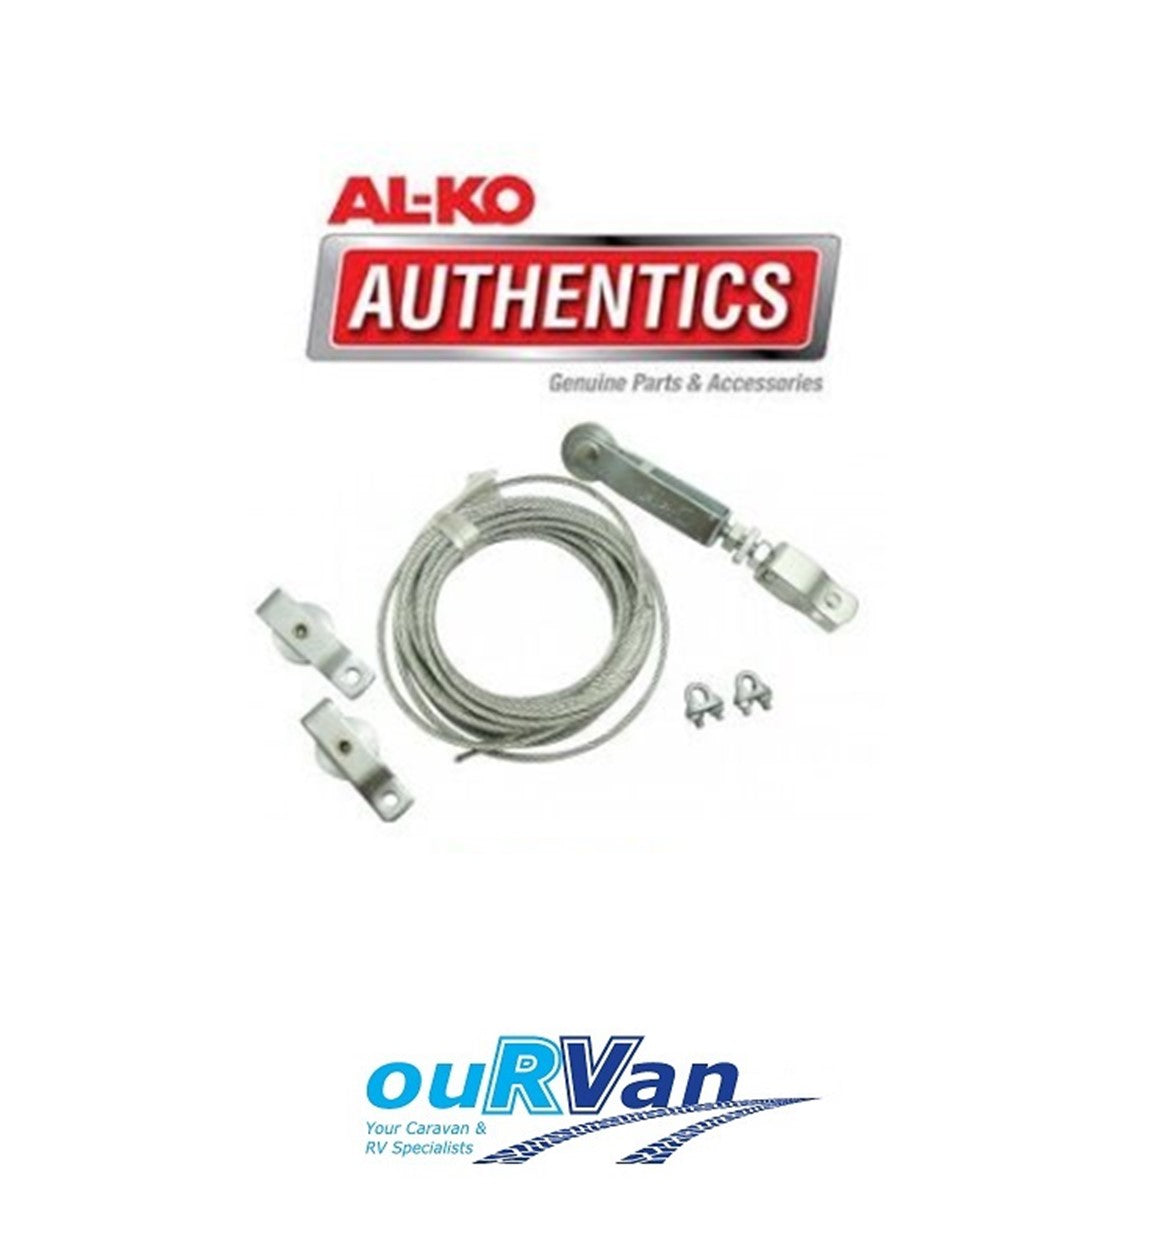 1 X Alko Handbrake 10m Cable Kit Genuine Part 323030 Caravan Trailer Galvanized